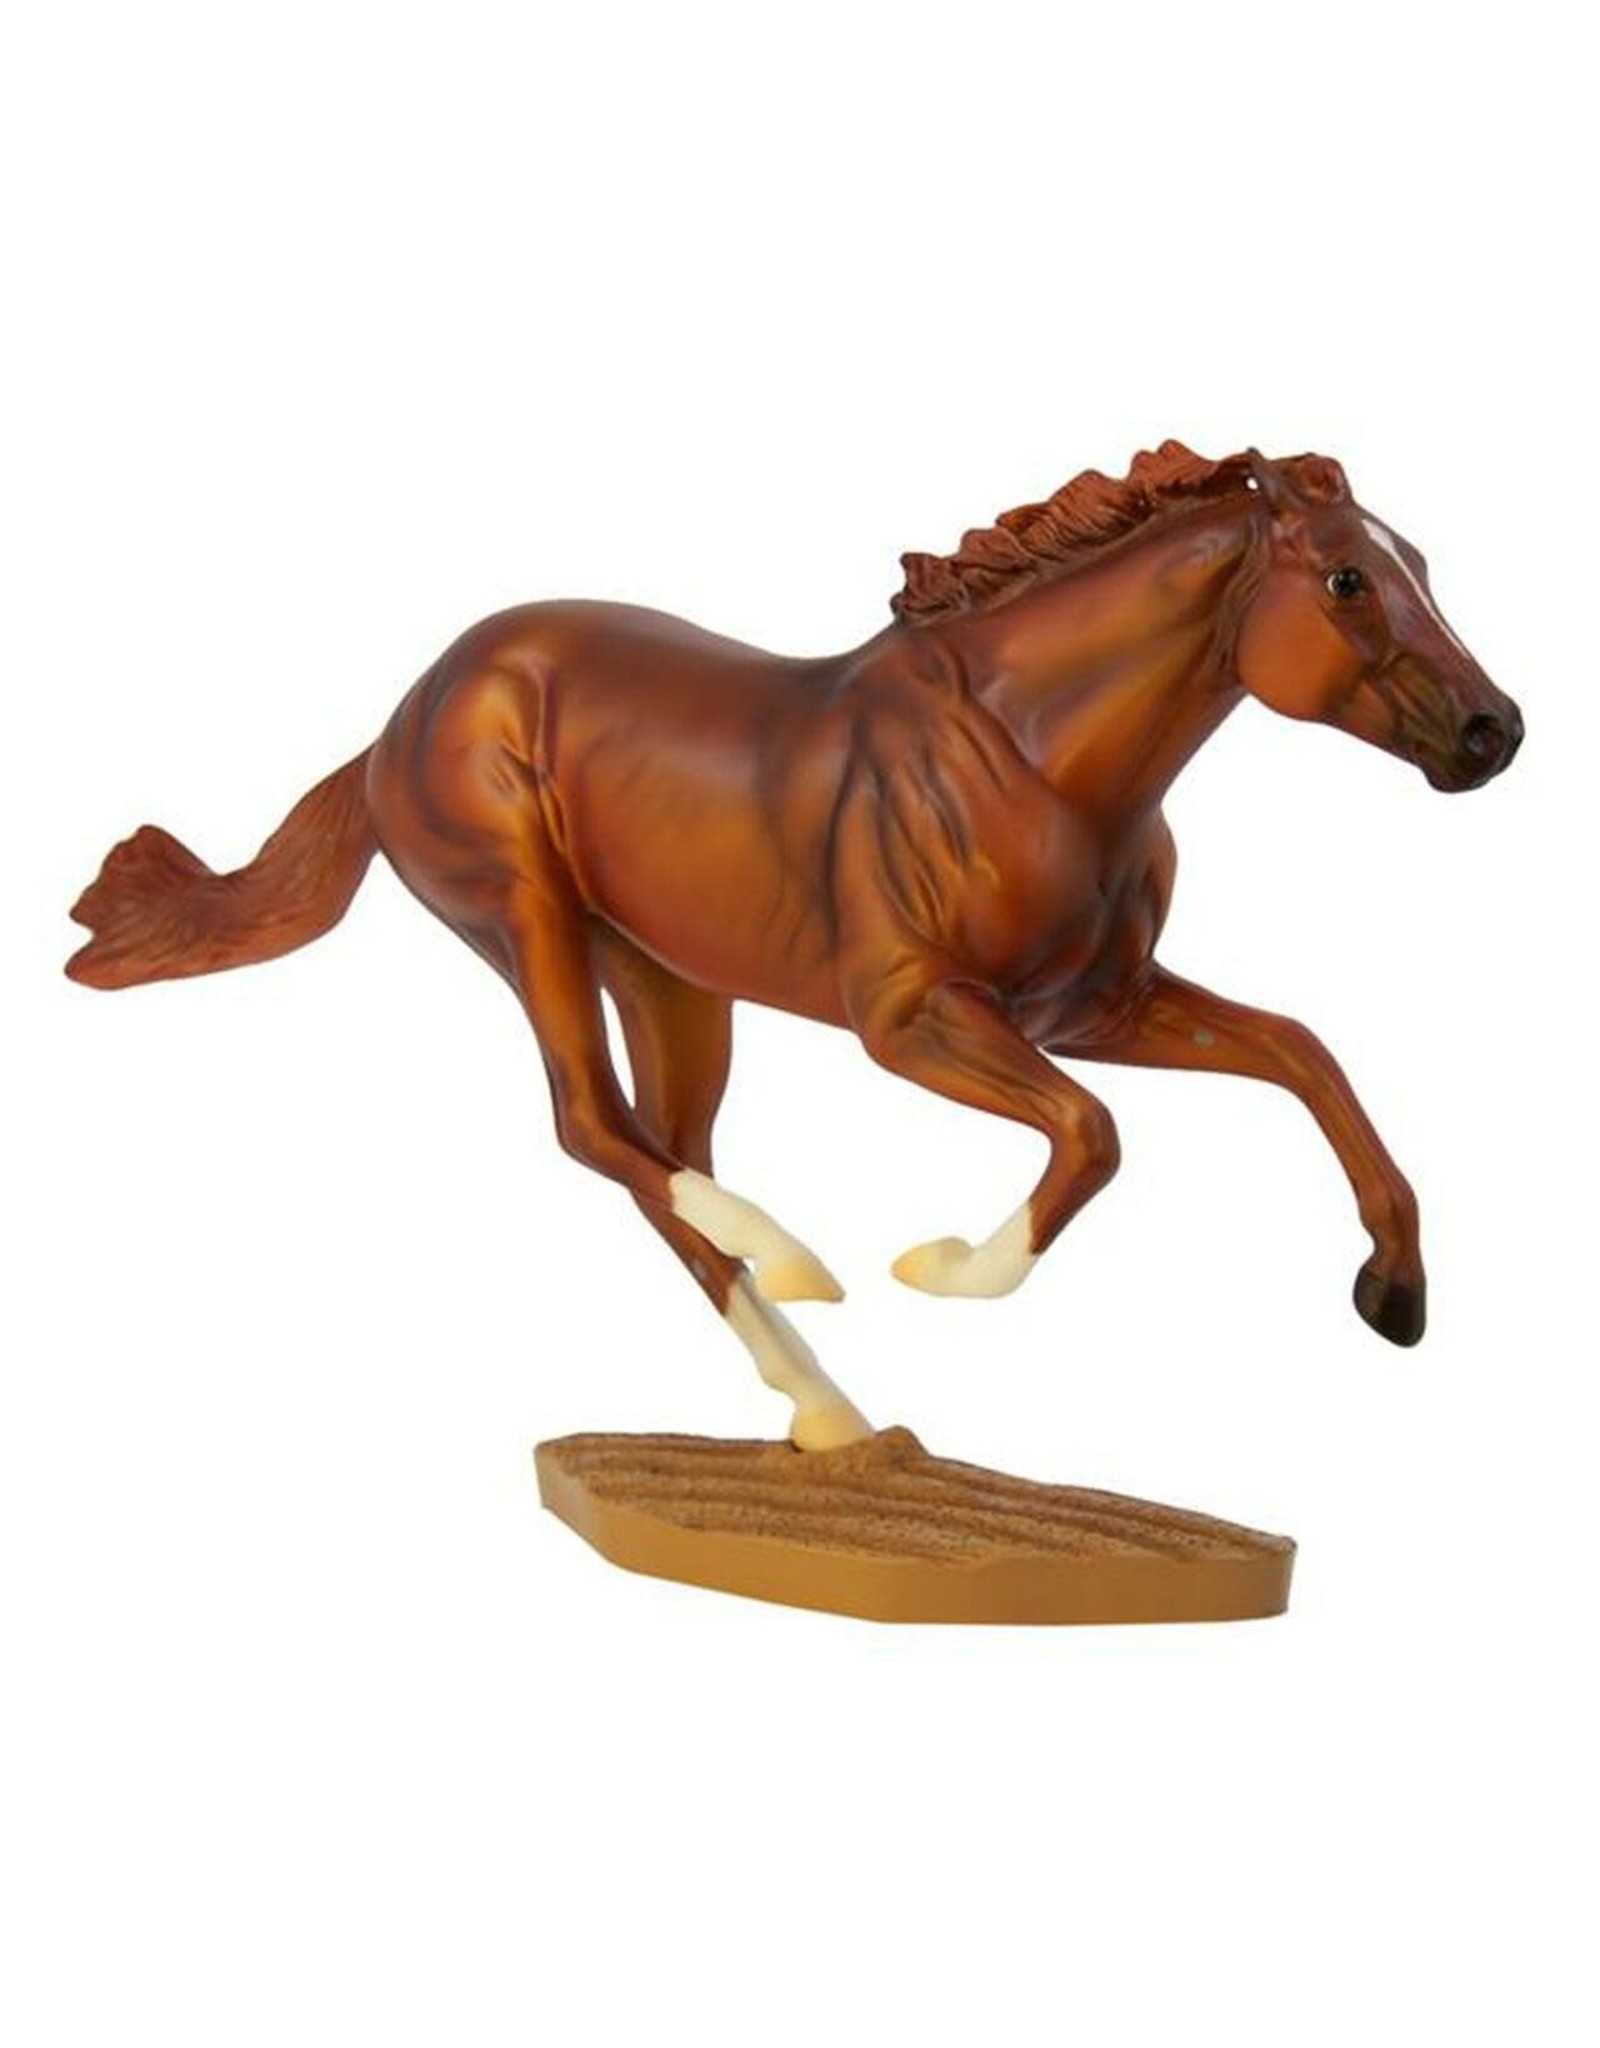 Breyer Secretariat Triple Crown Winner 1345 Model Horse